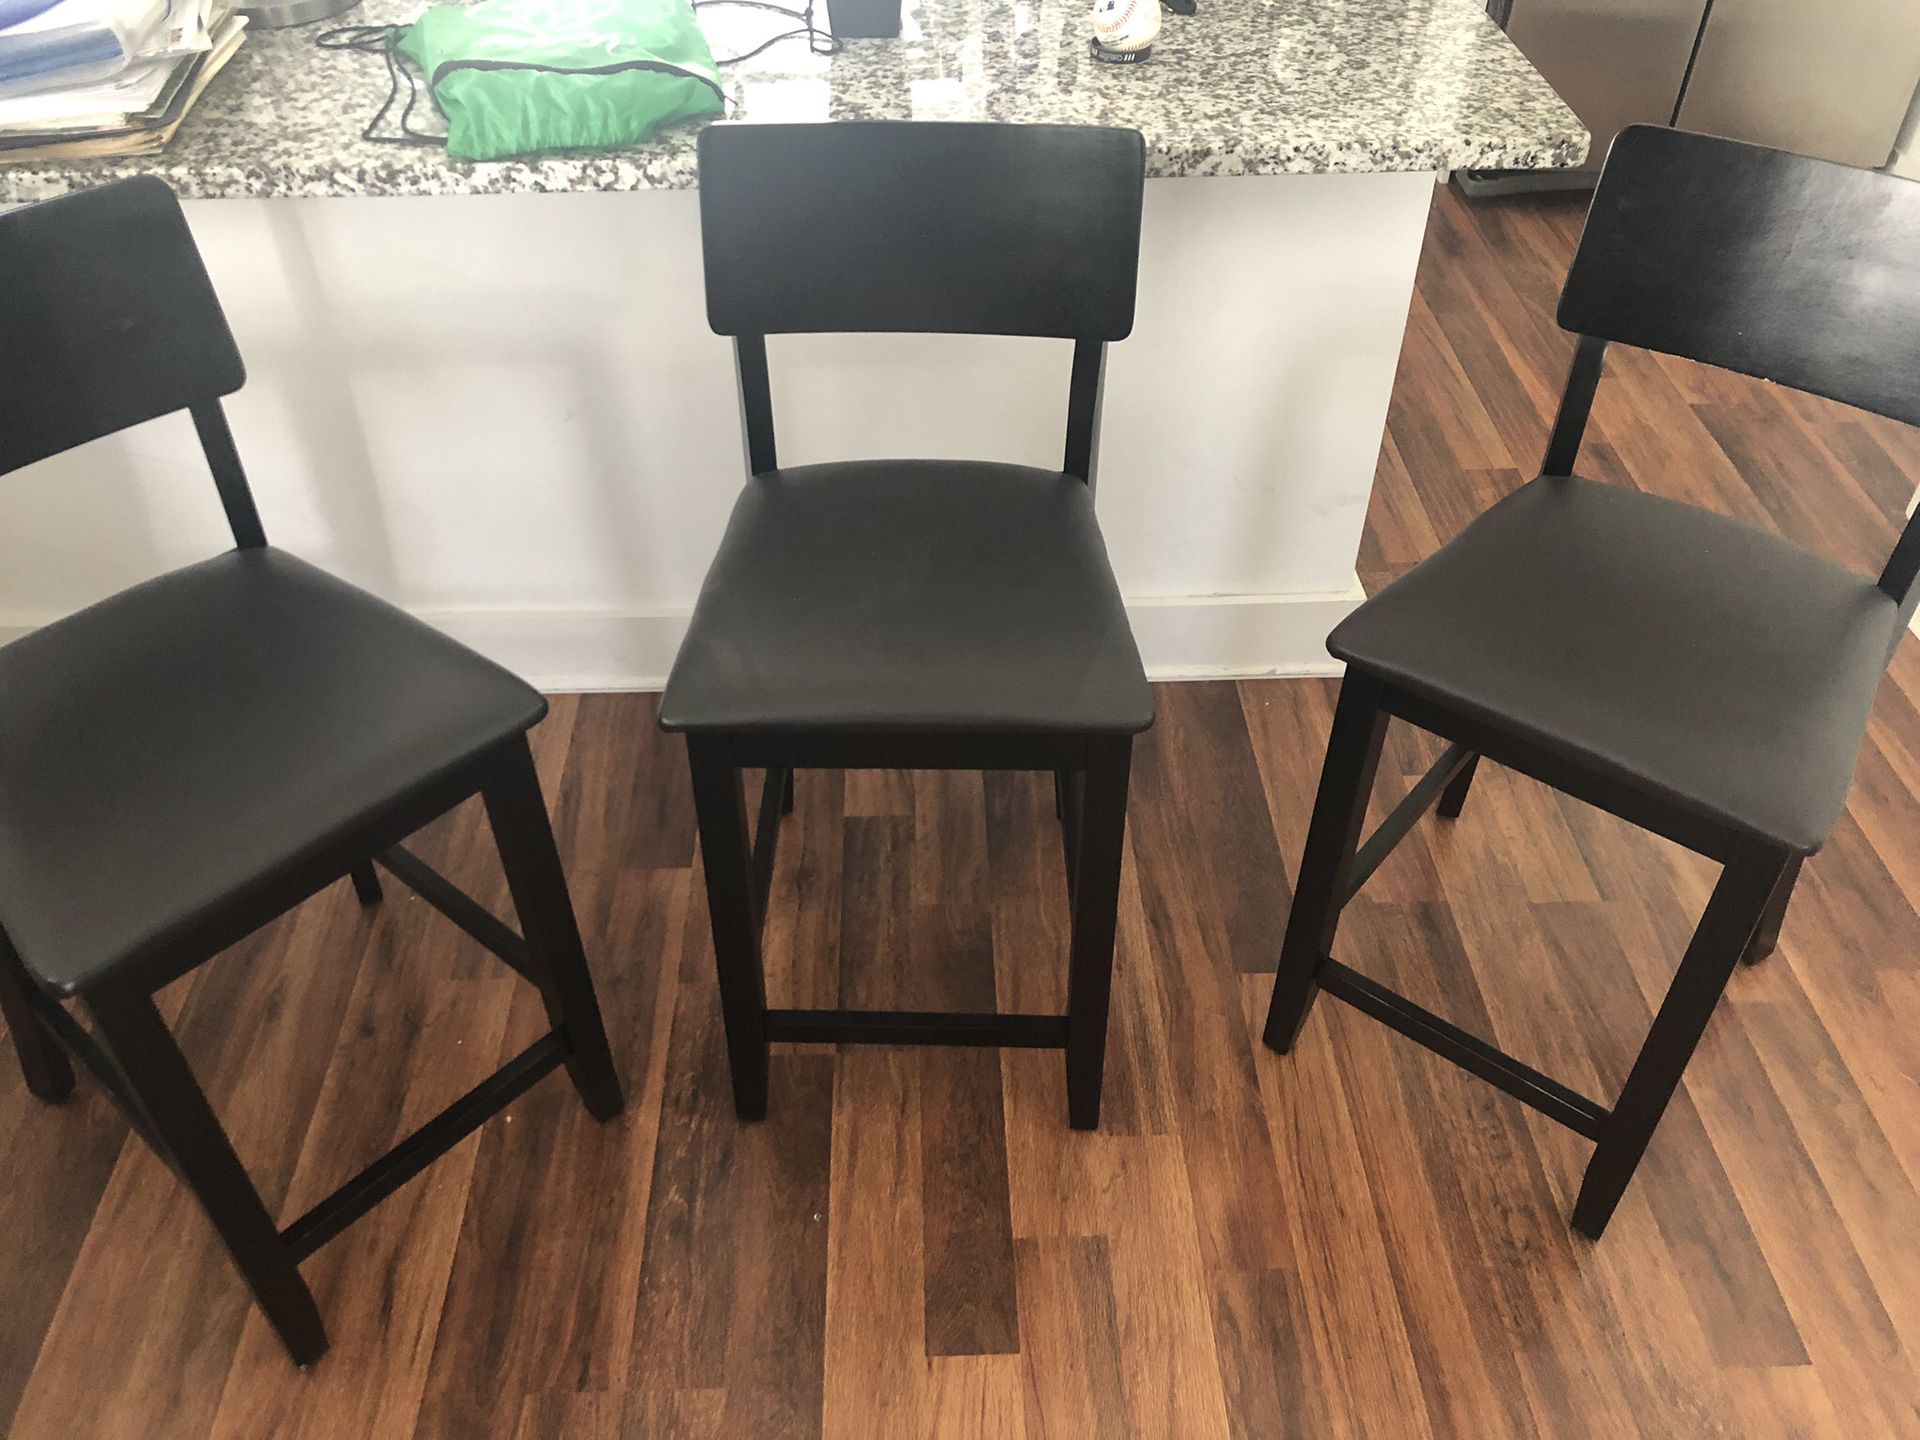 3 hardwood bar stools